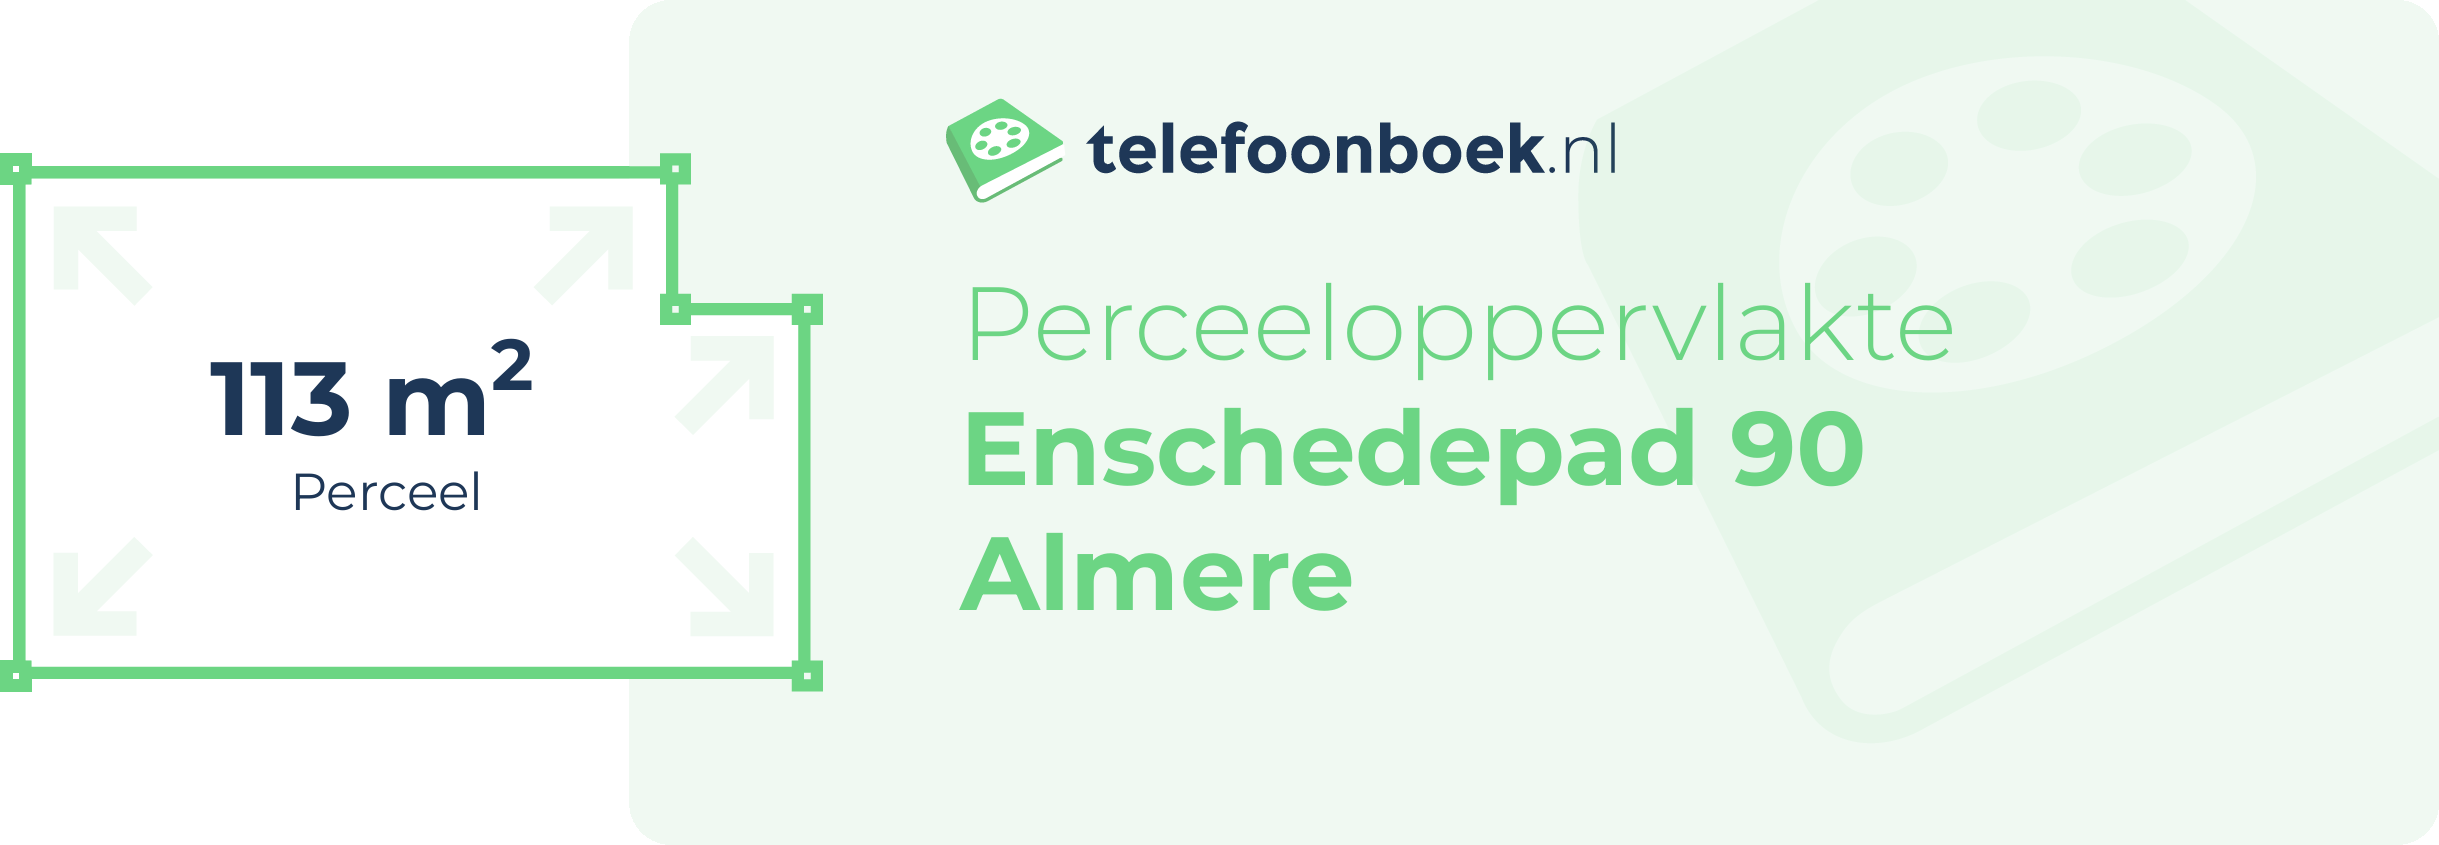 Perceeloppervlakte Enschedepad 90 Almere